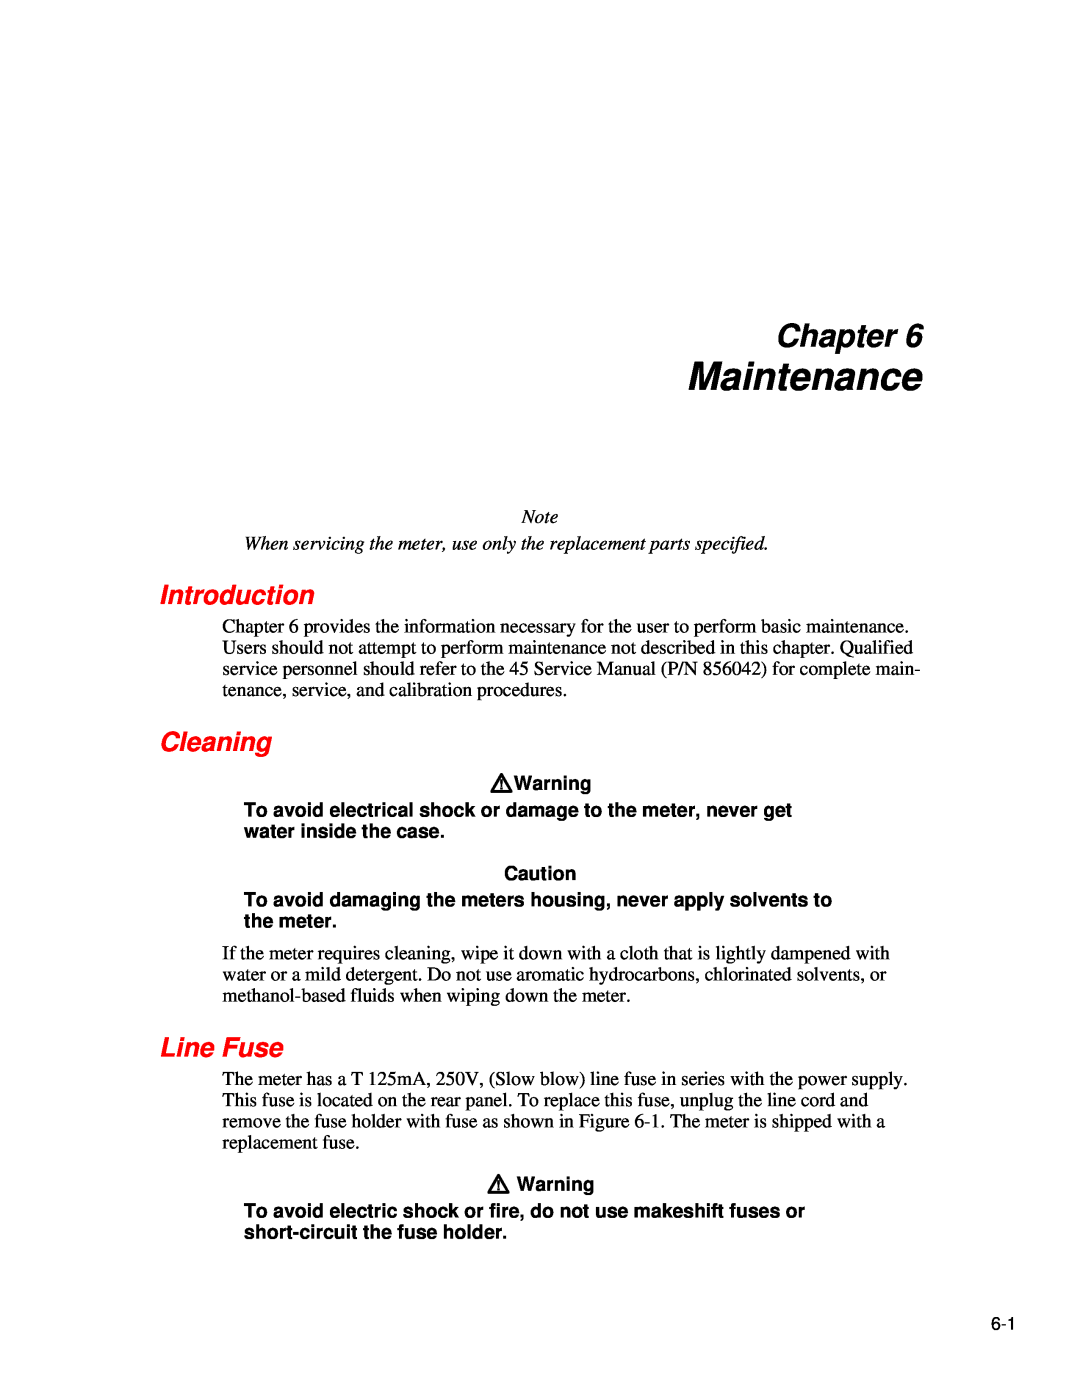 Fluke 45 user manual Maintenance, Cleaning, Line Fuse, WWarning, Chapter, Introduction 